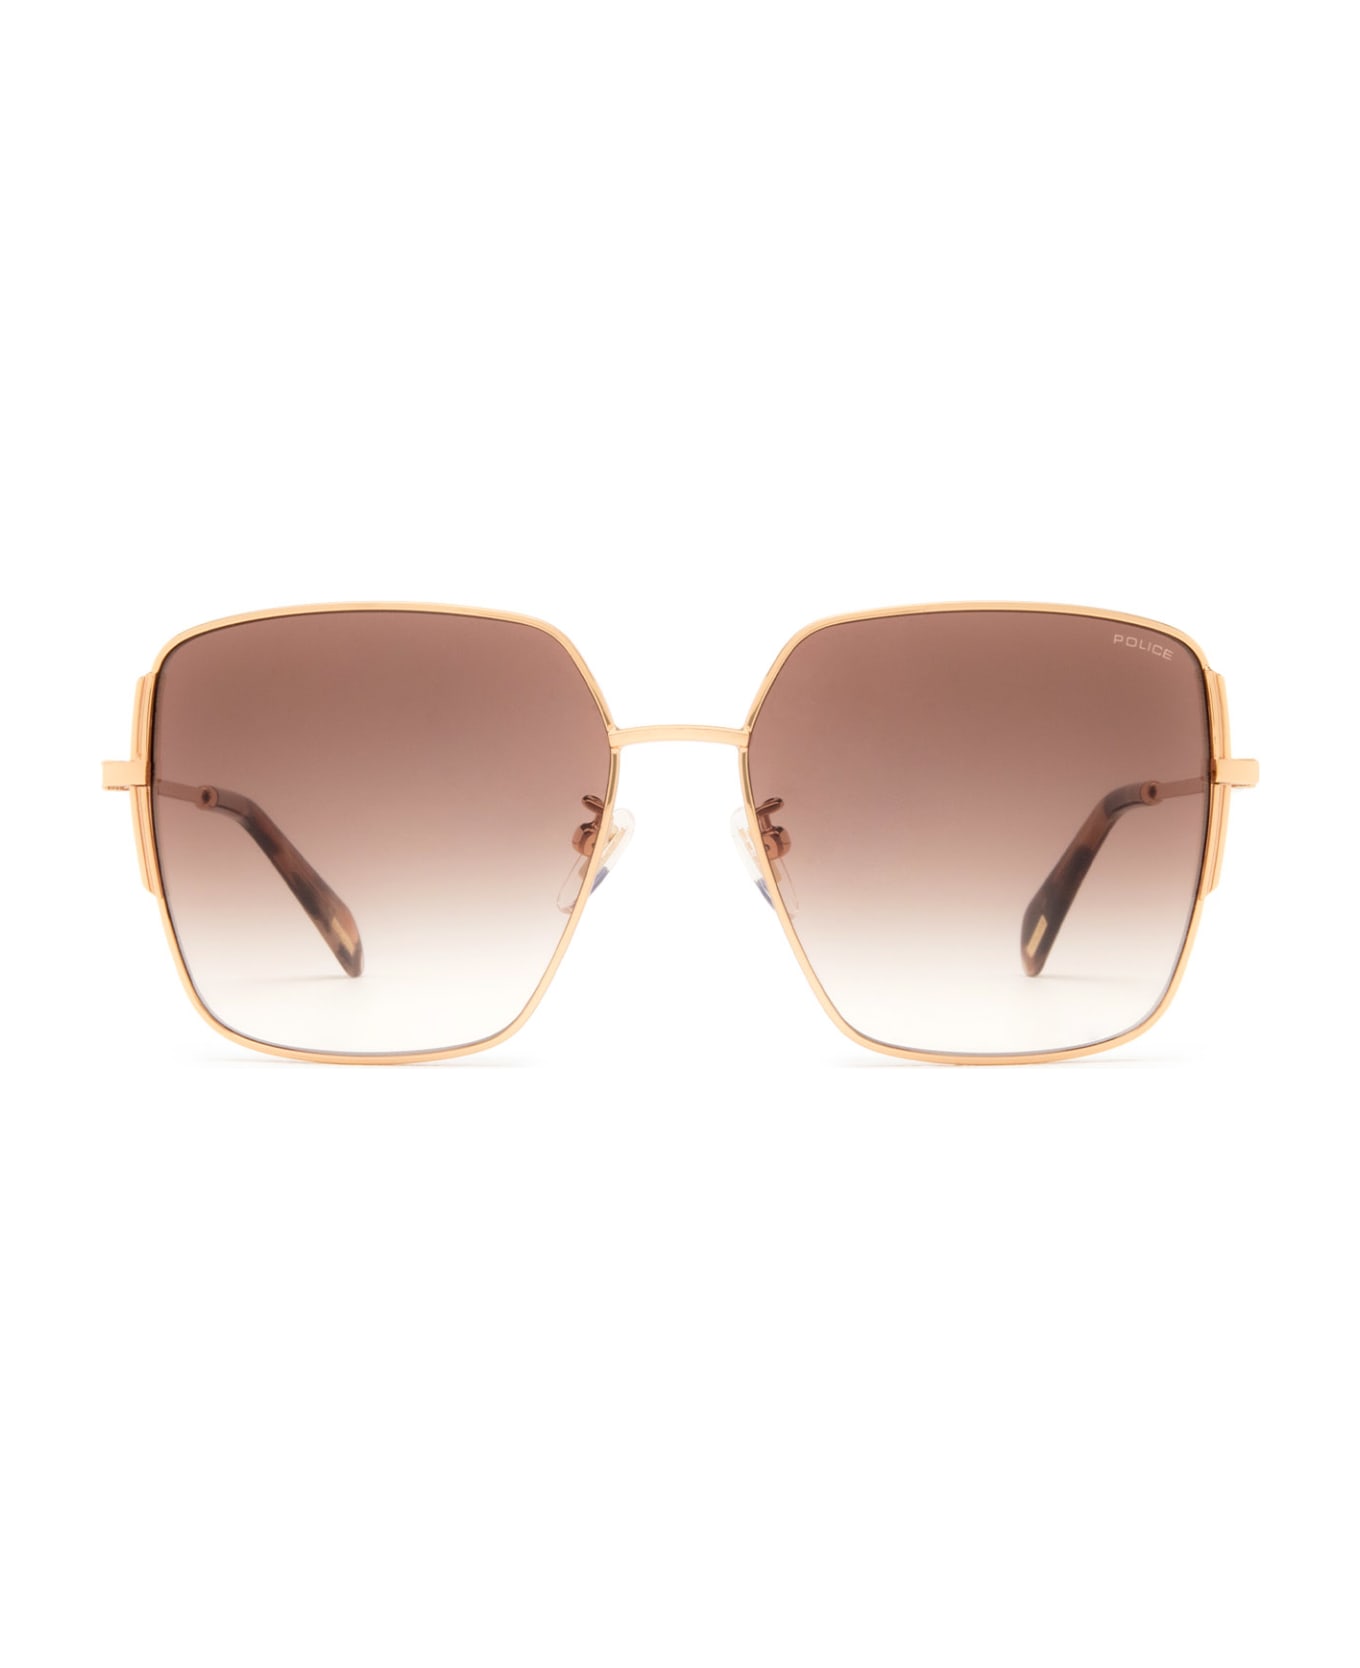 Police Splf34 Copper Gold Sunglasses - Copper Gold サングラス